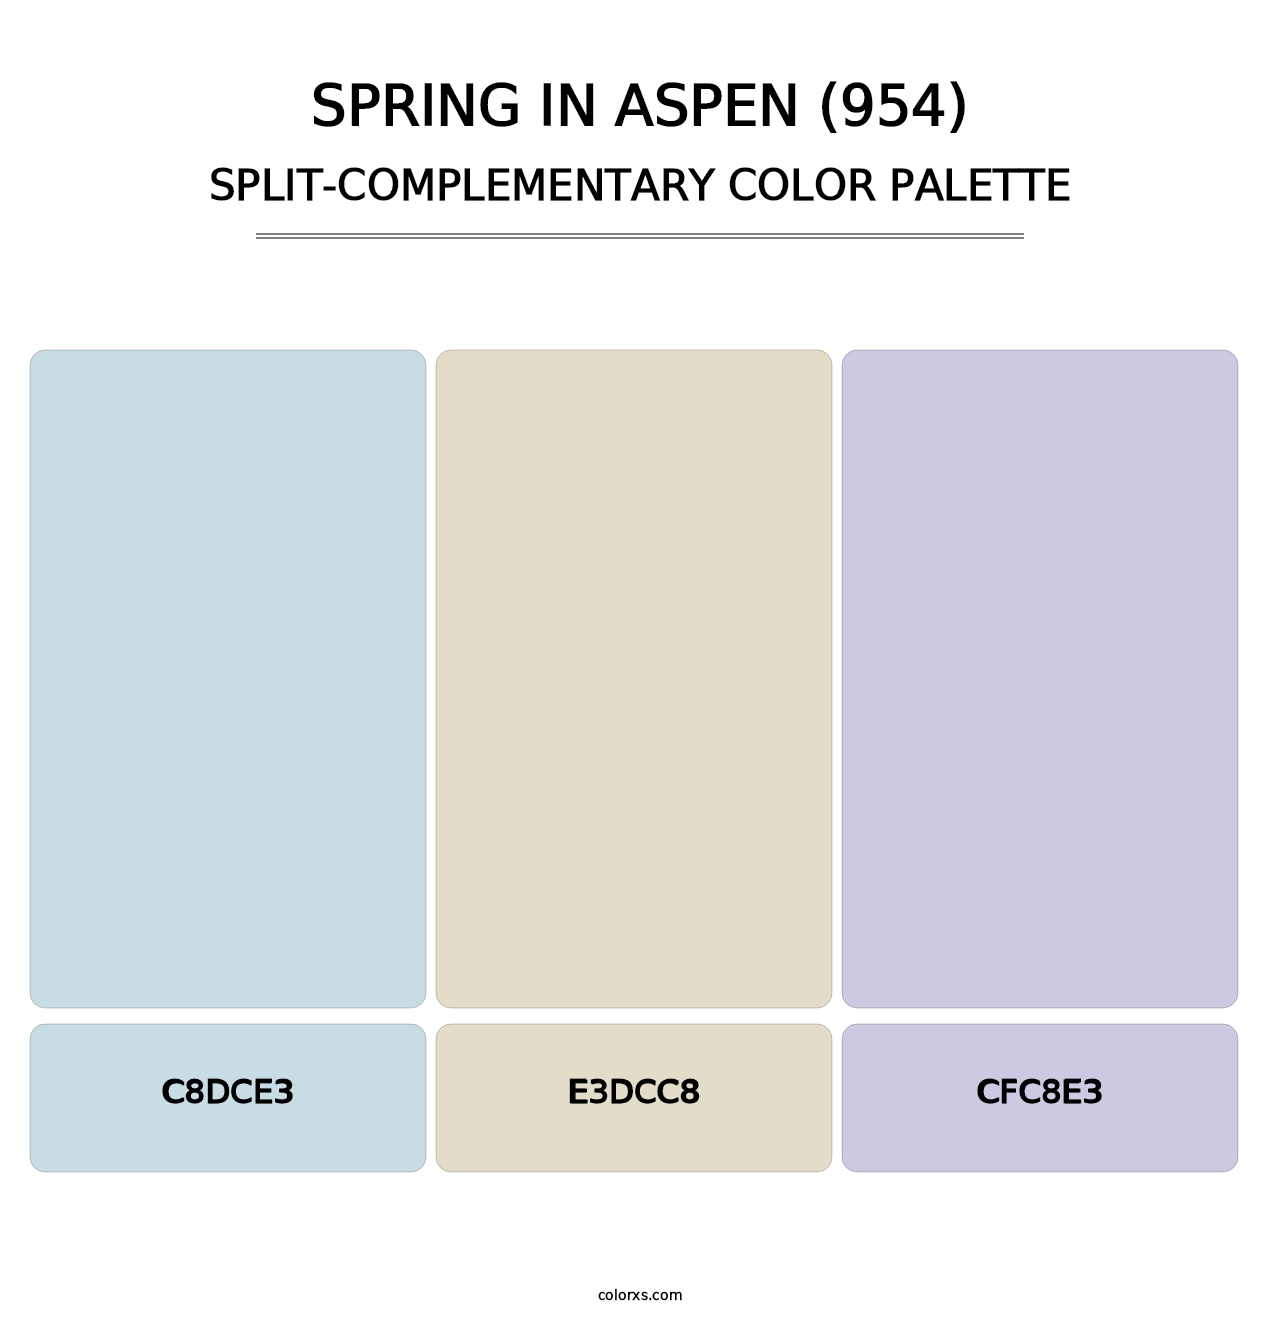 Spring in Aspen (954) - Split-Complementary Color Palette